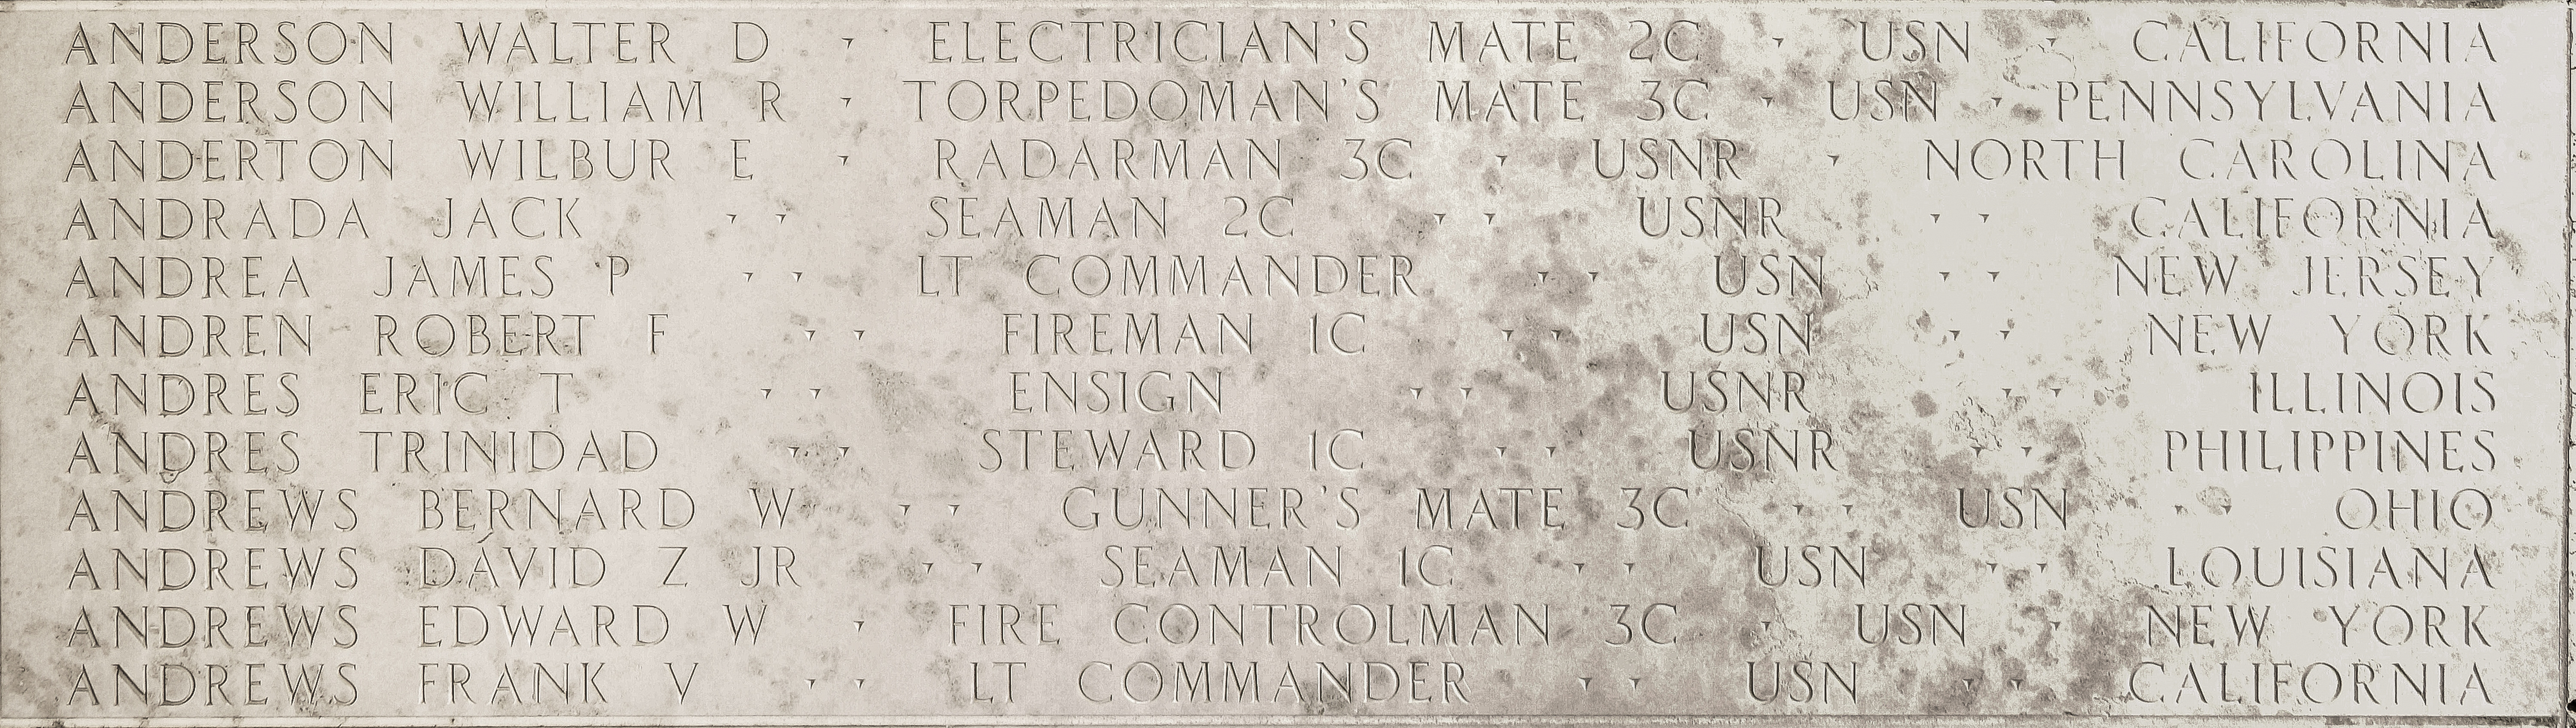 Wilbur E. Anderton, Radarman Third Class